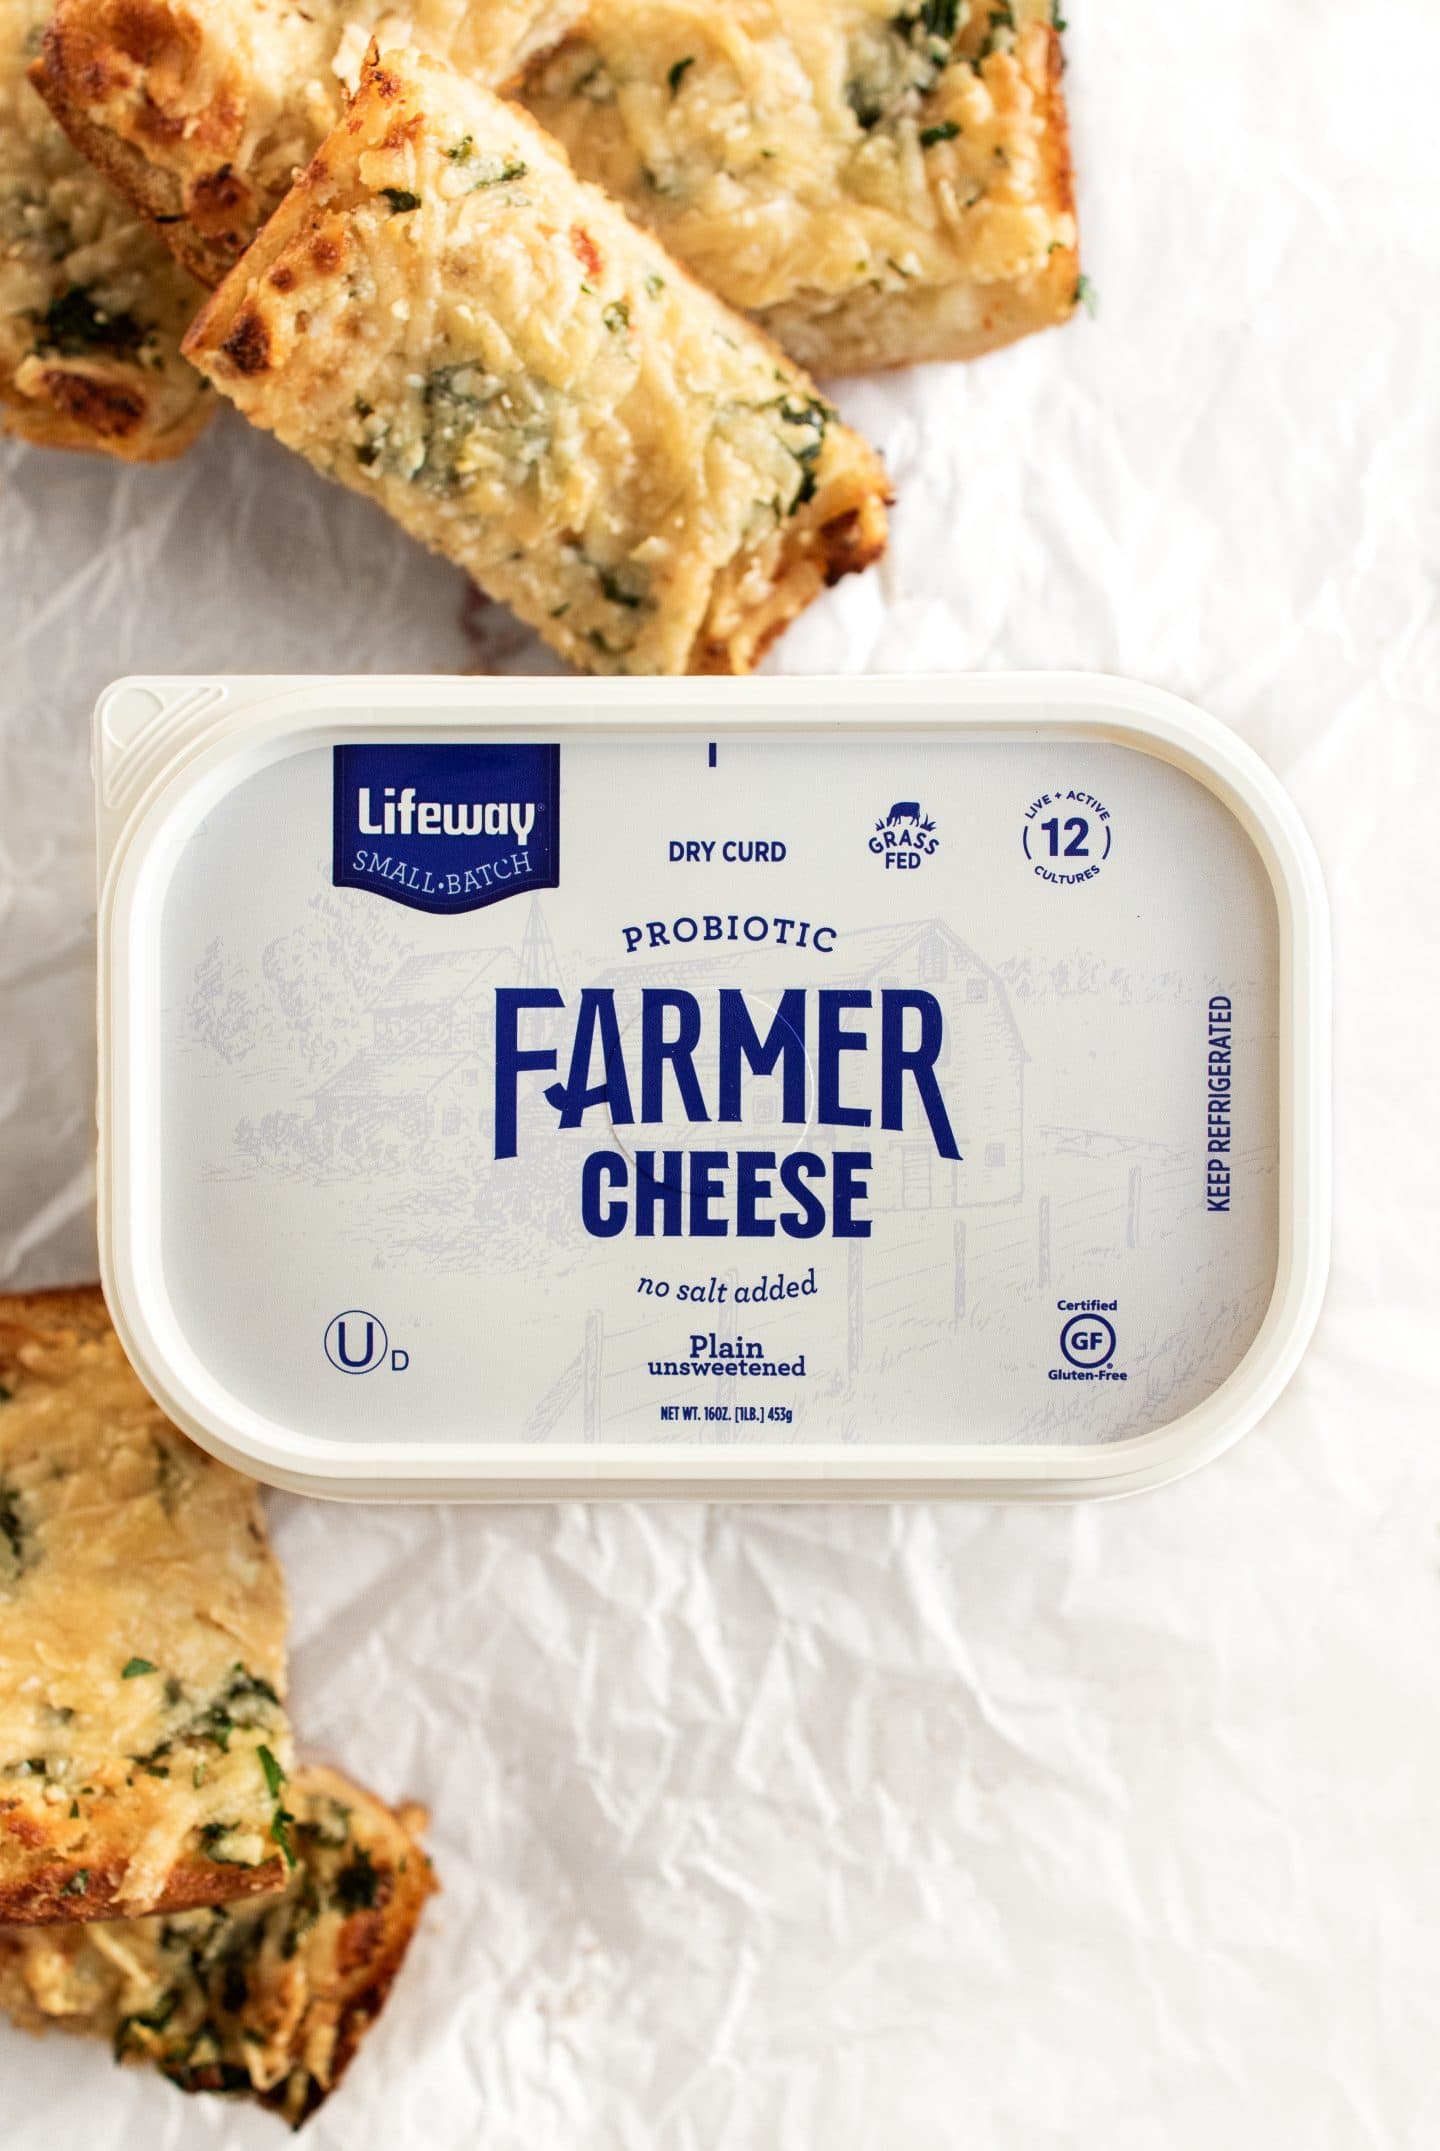 Lifeway farmers cheese